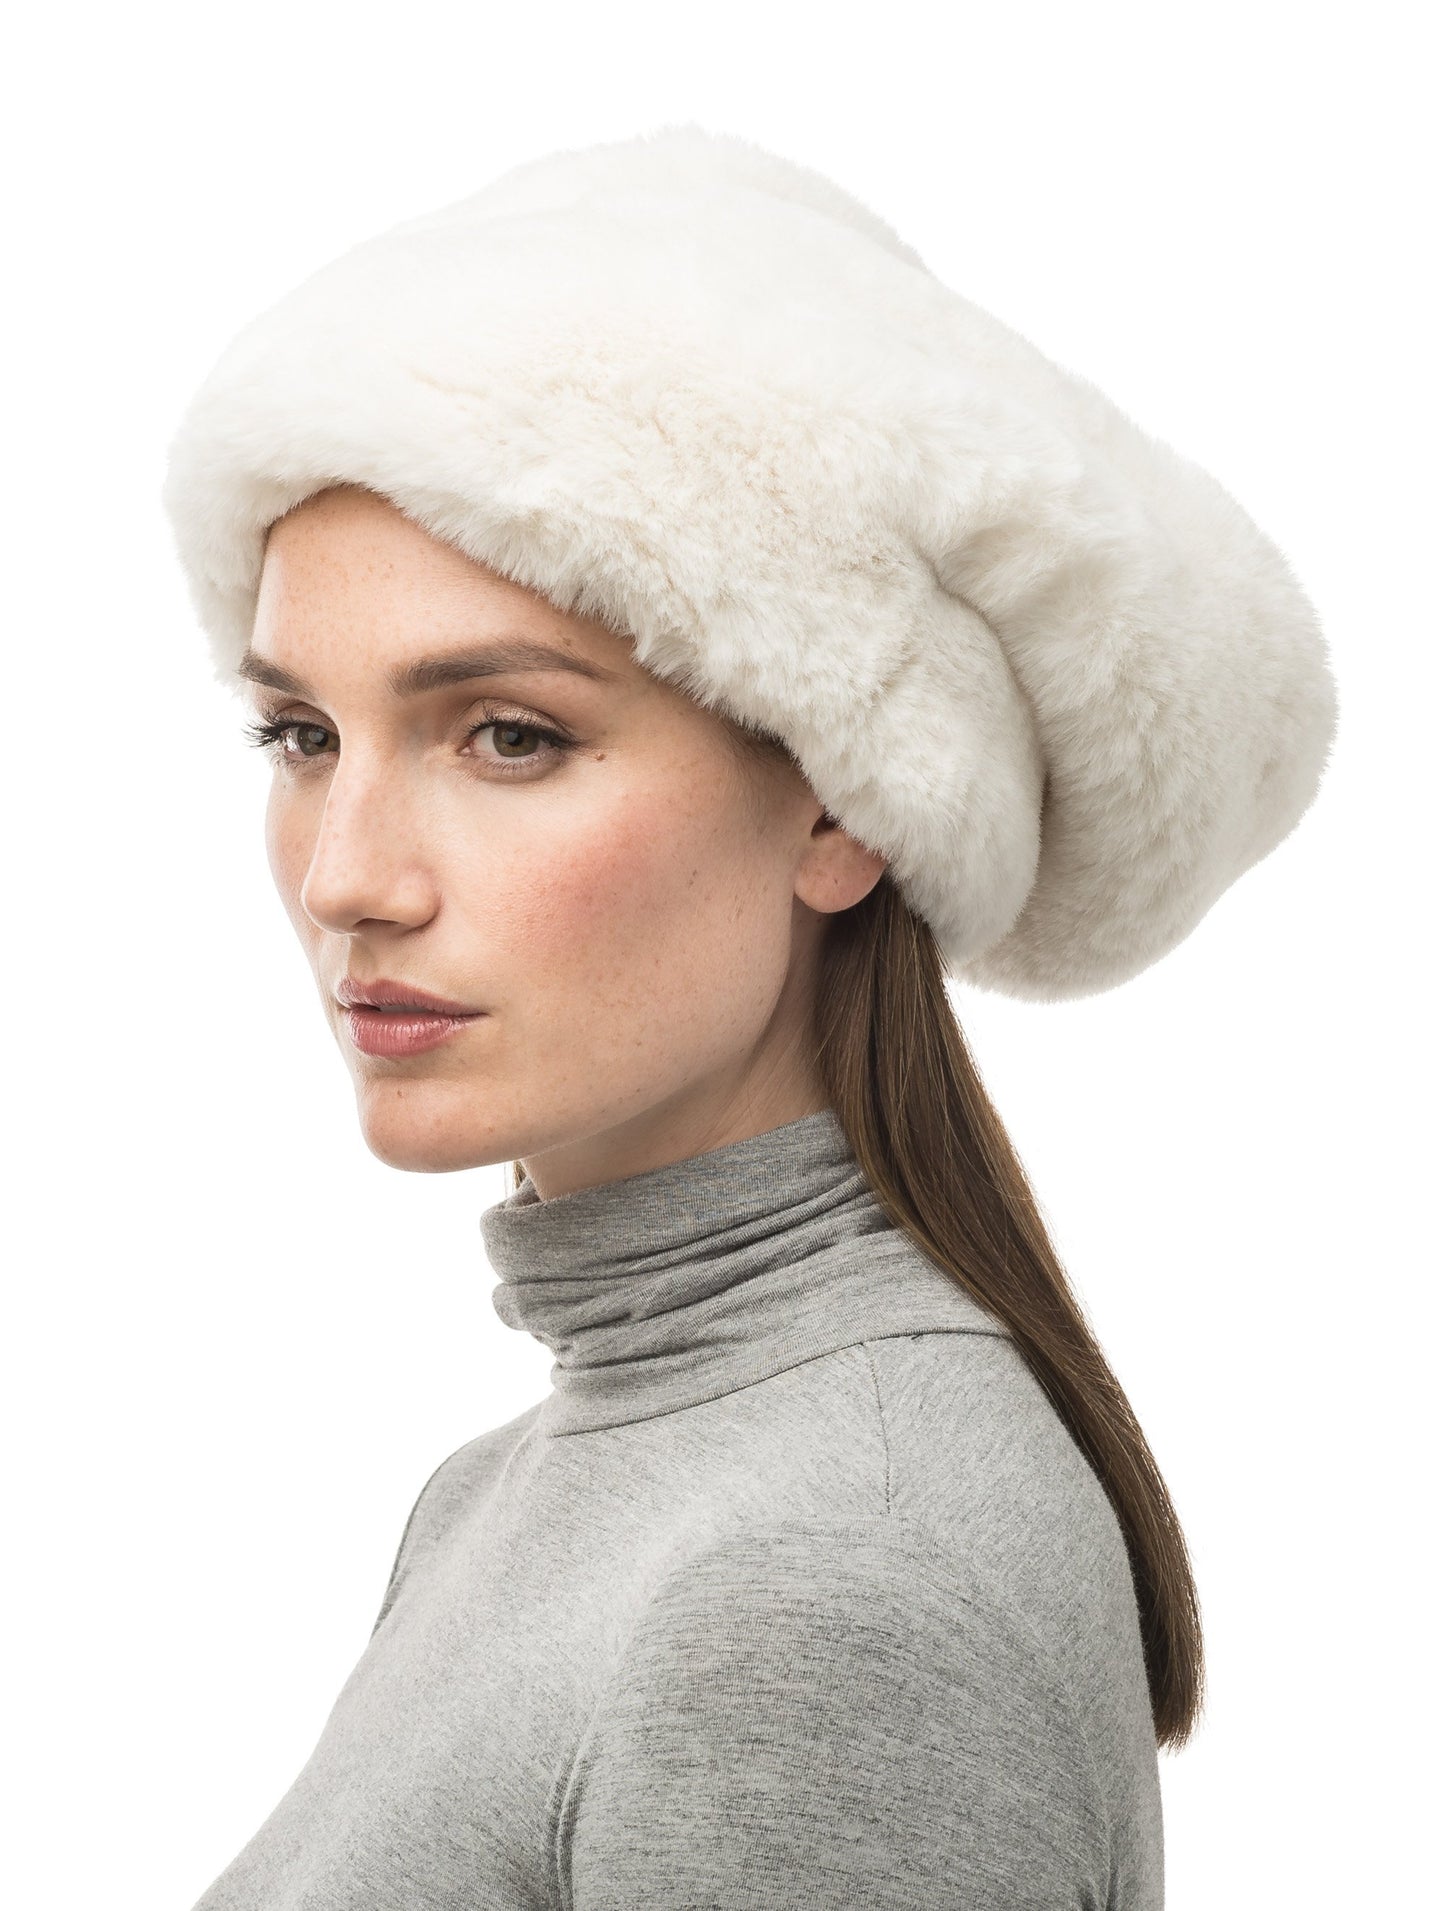 Oversized, slouchy faux fur hat in Cream